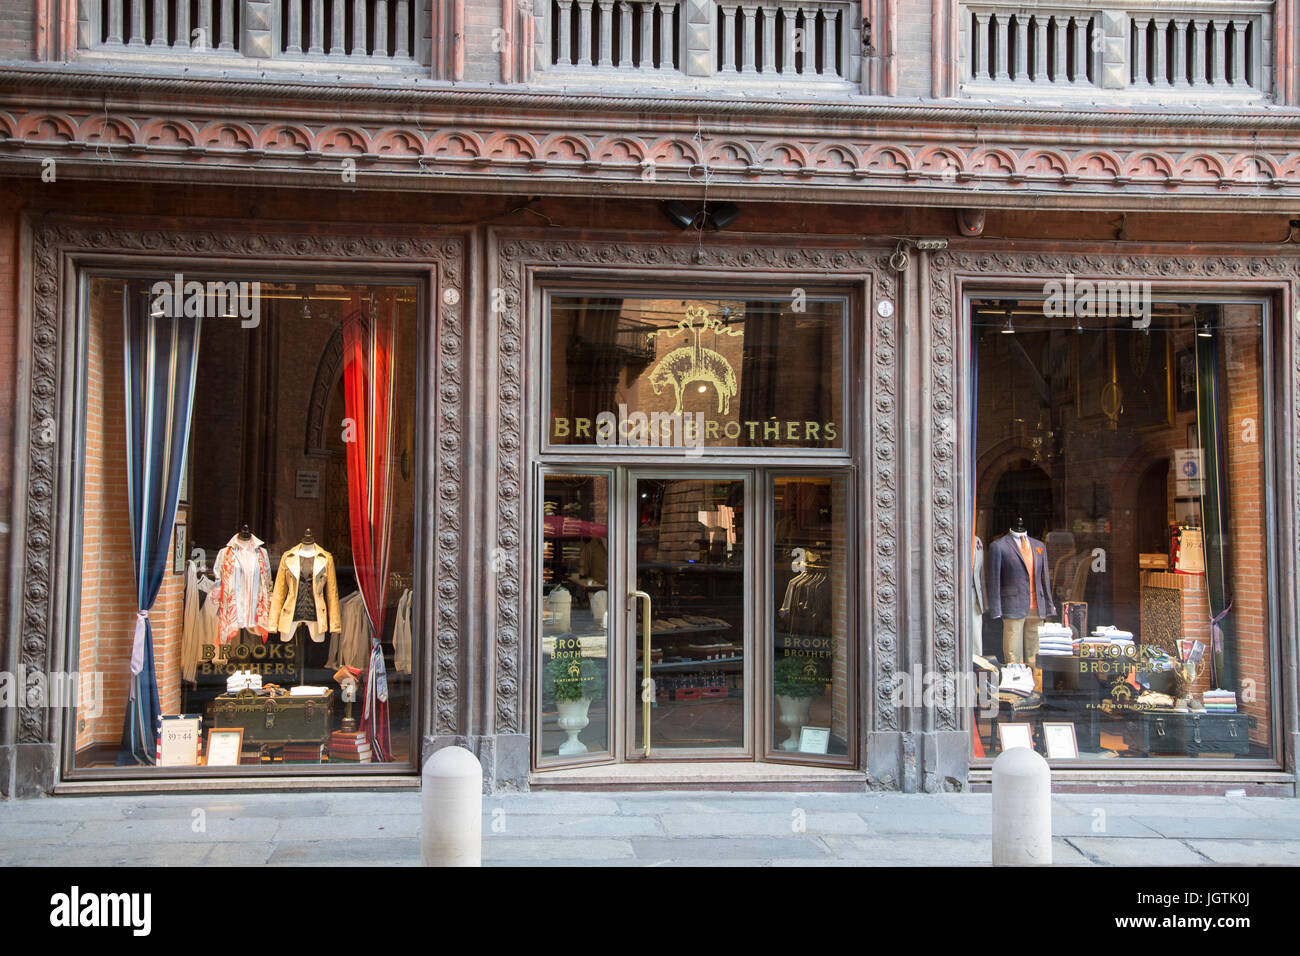 Brooks Brothers Clothes Shop; Bologna 